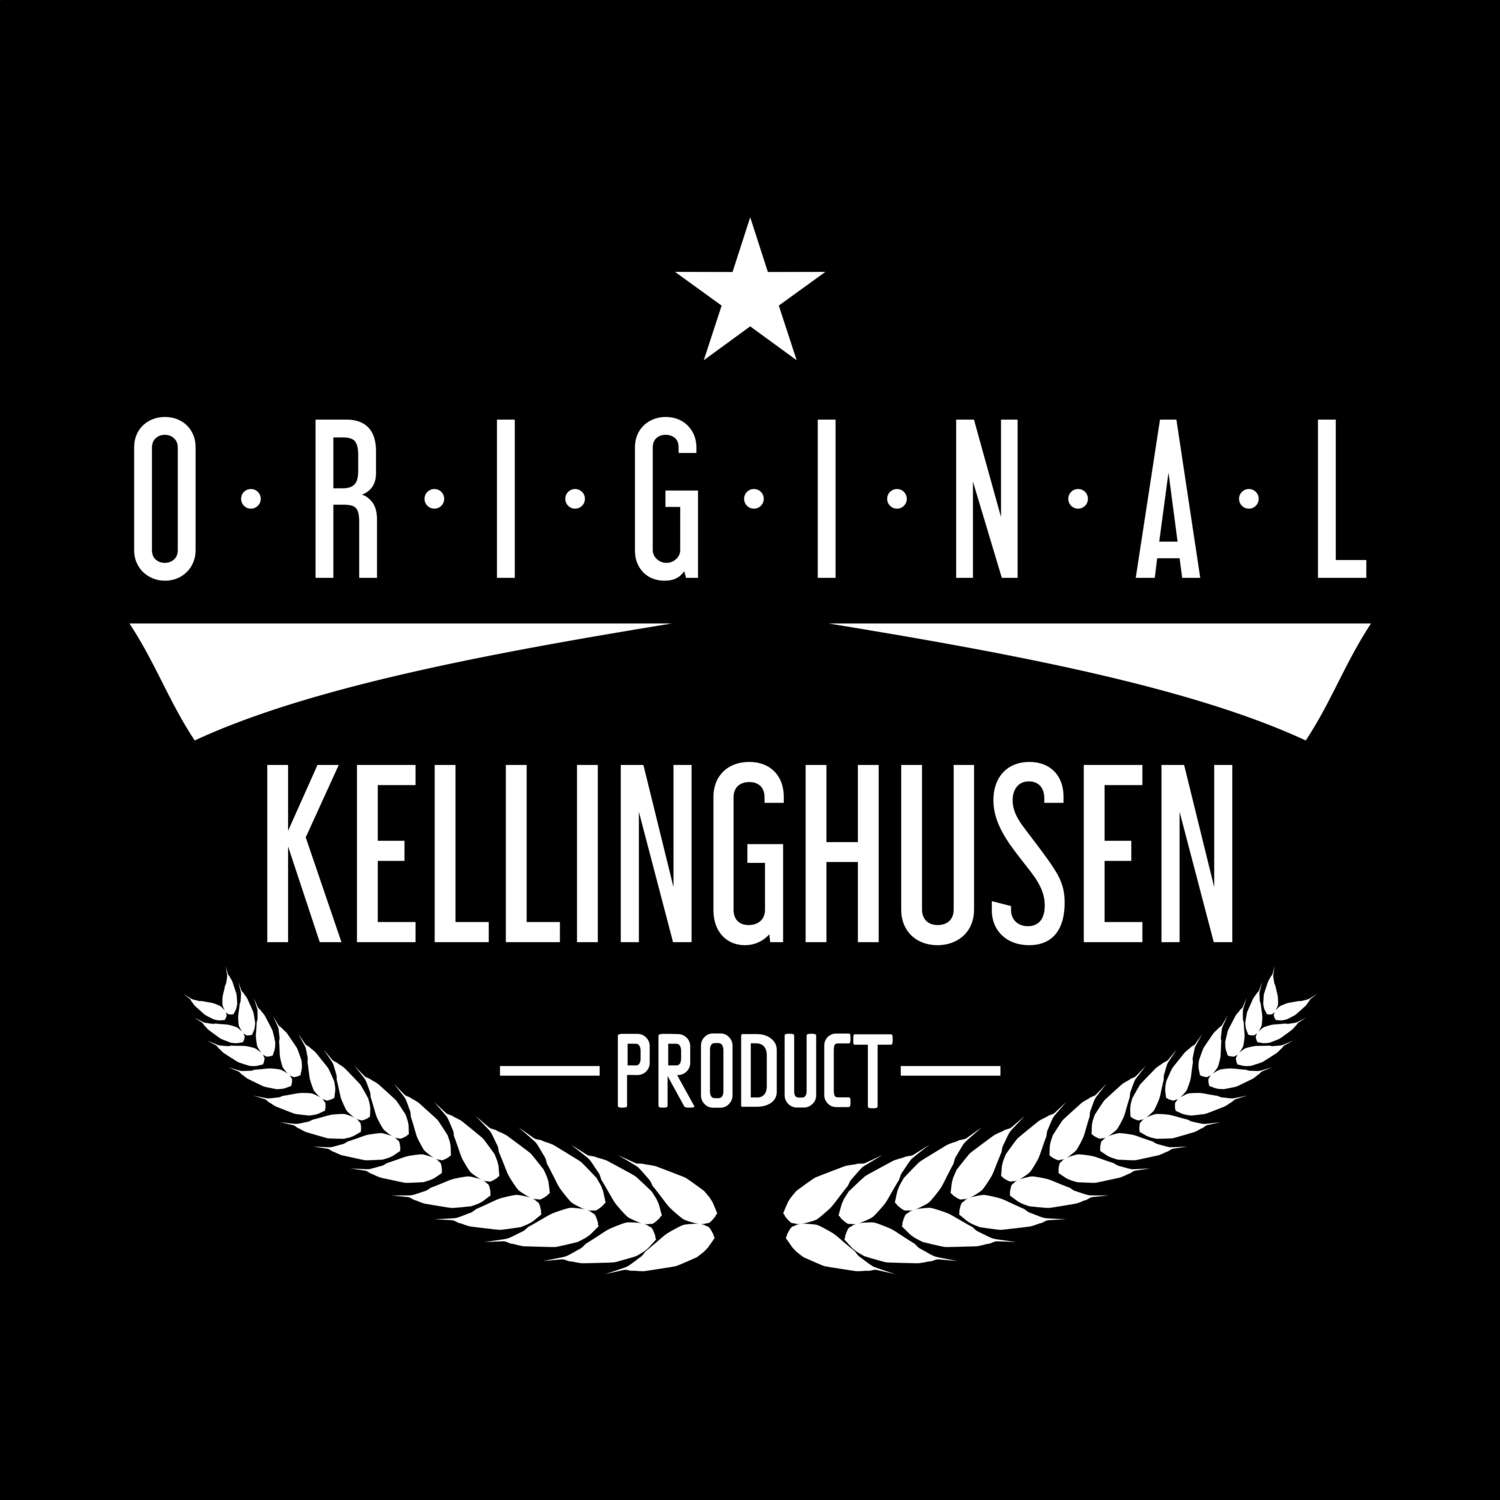 Kellinghusen T-Shirt »Original Product«